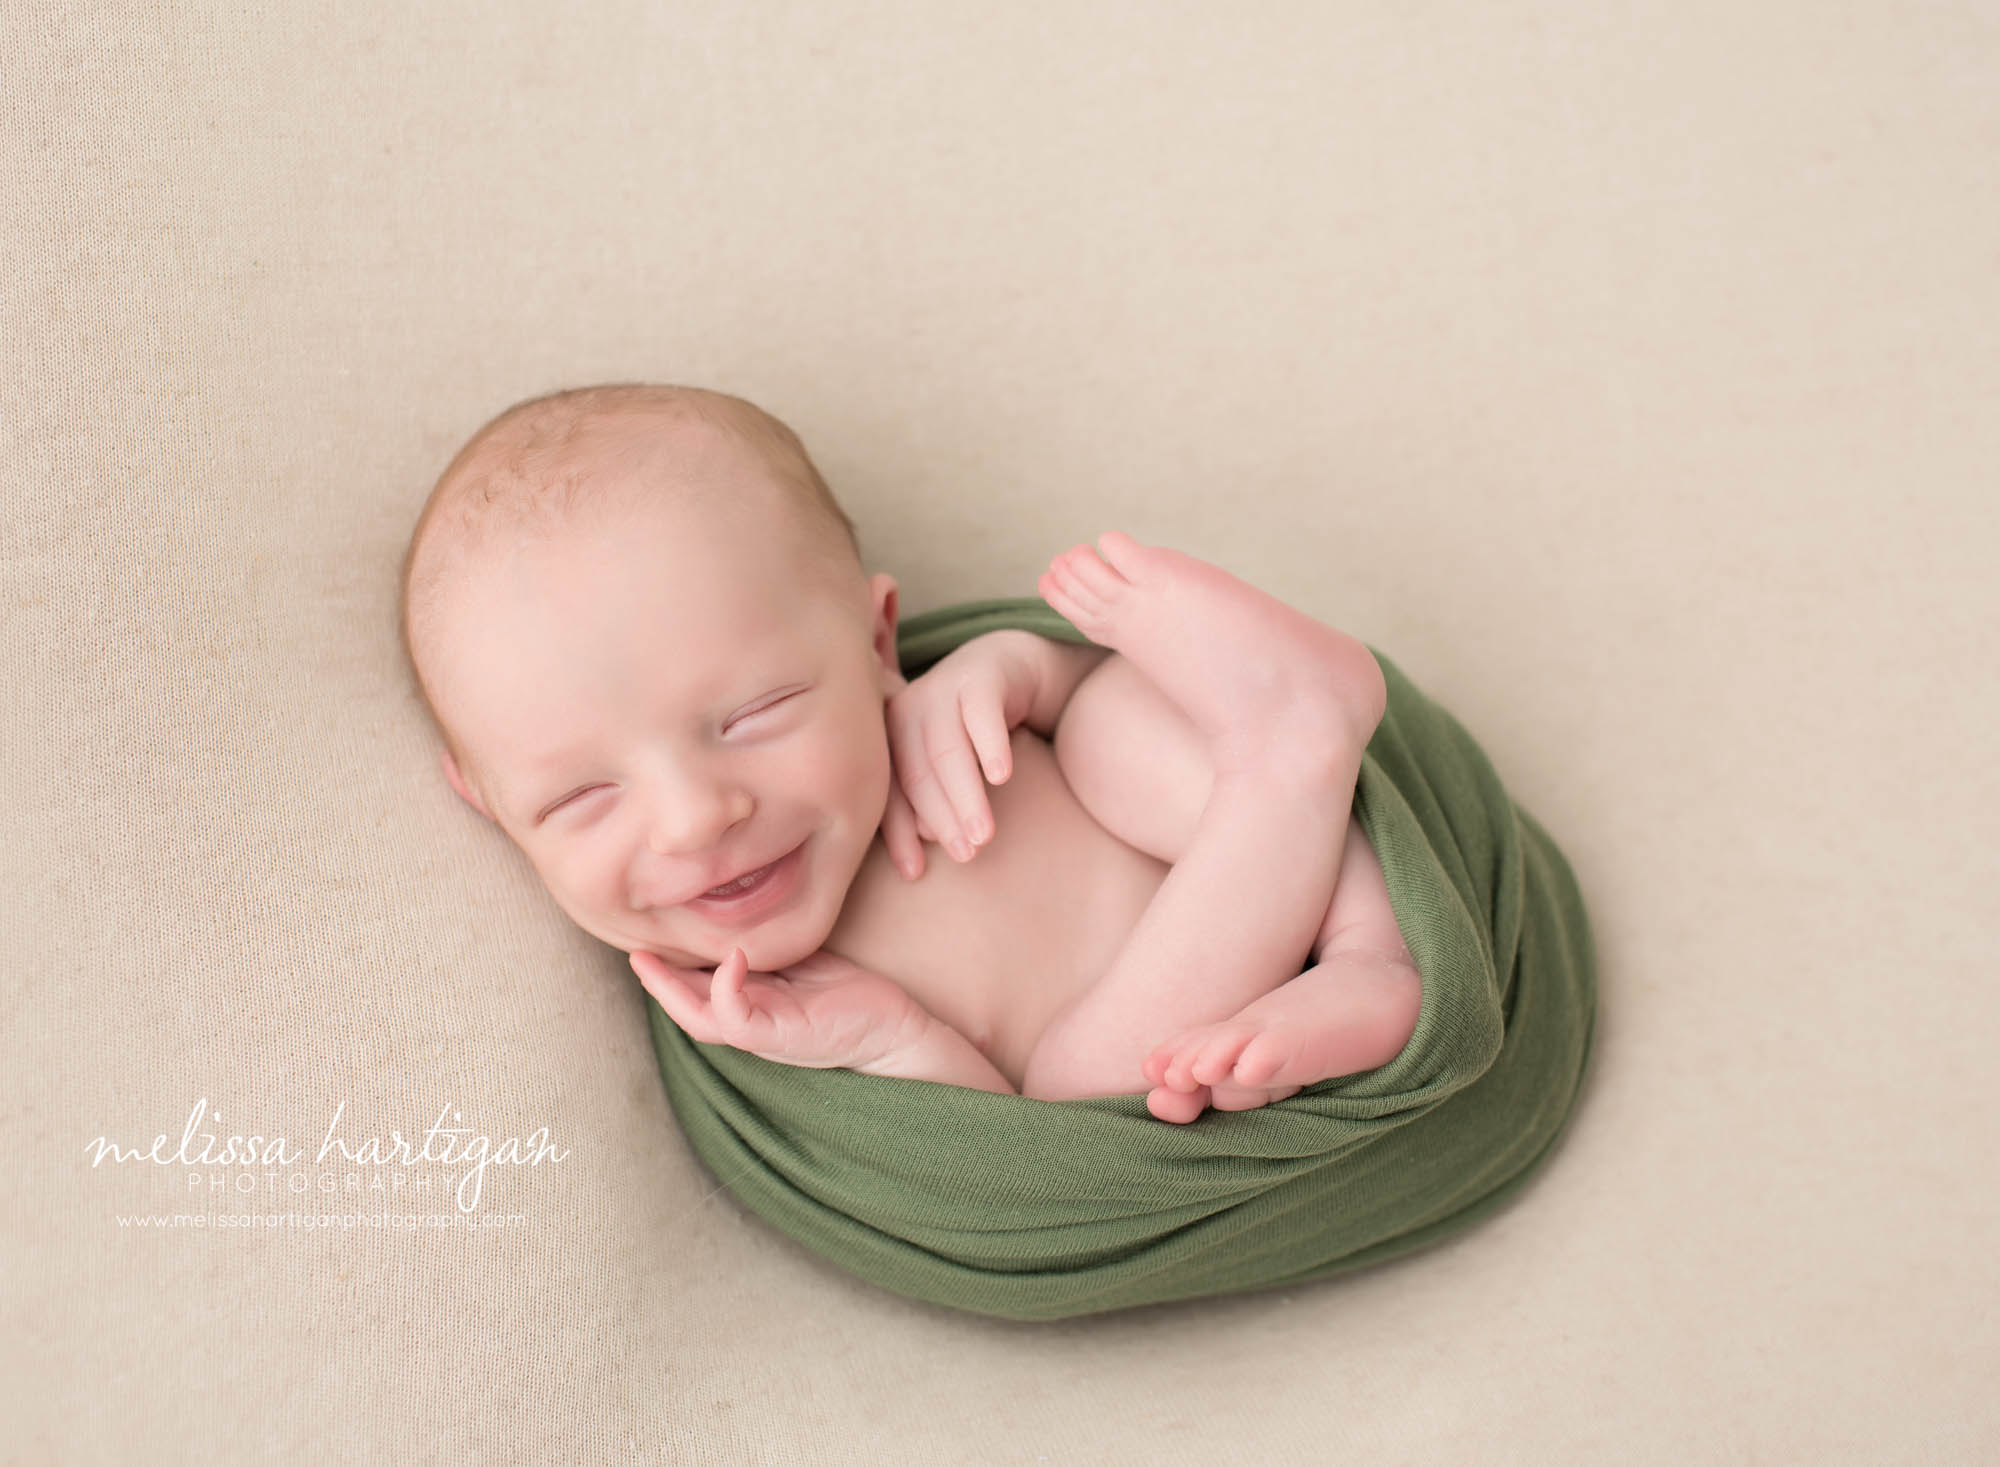 Melissa Hartigan Photography CT Newborn Photographer Stafford baby boy sleeping wrapped in green smiling